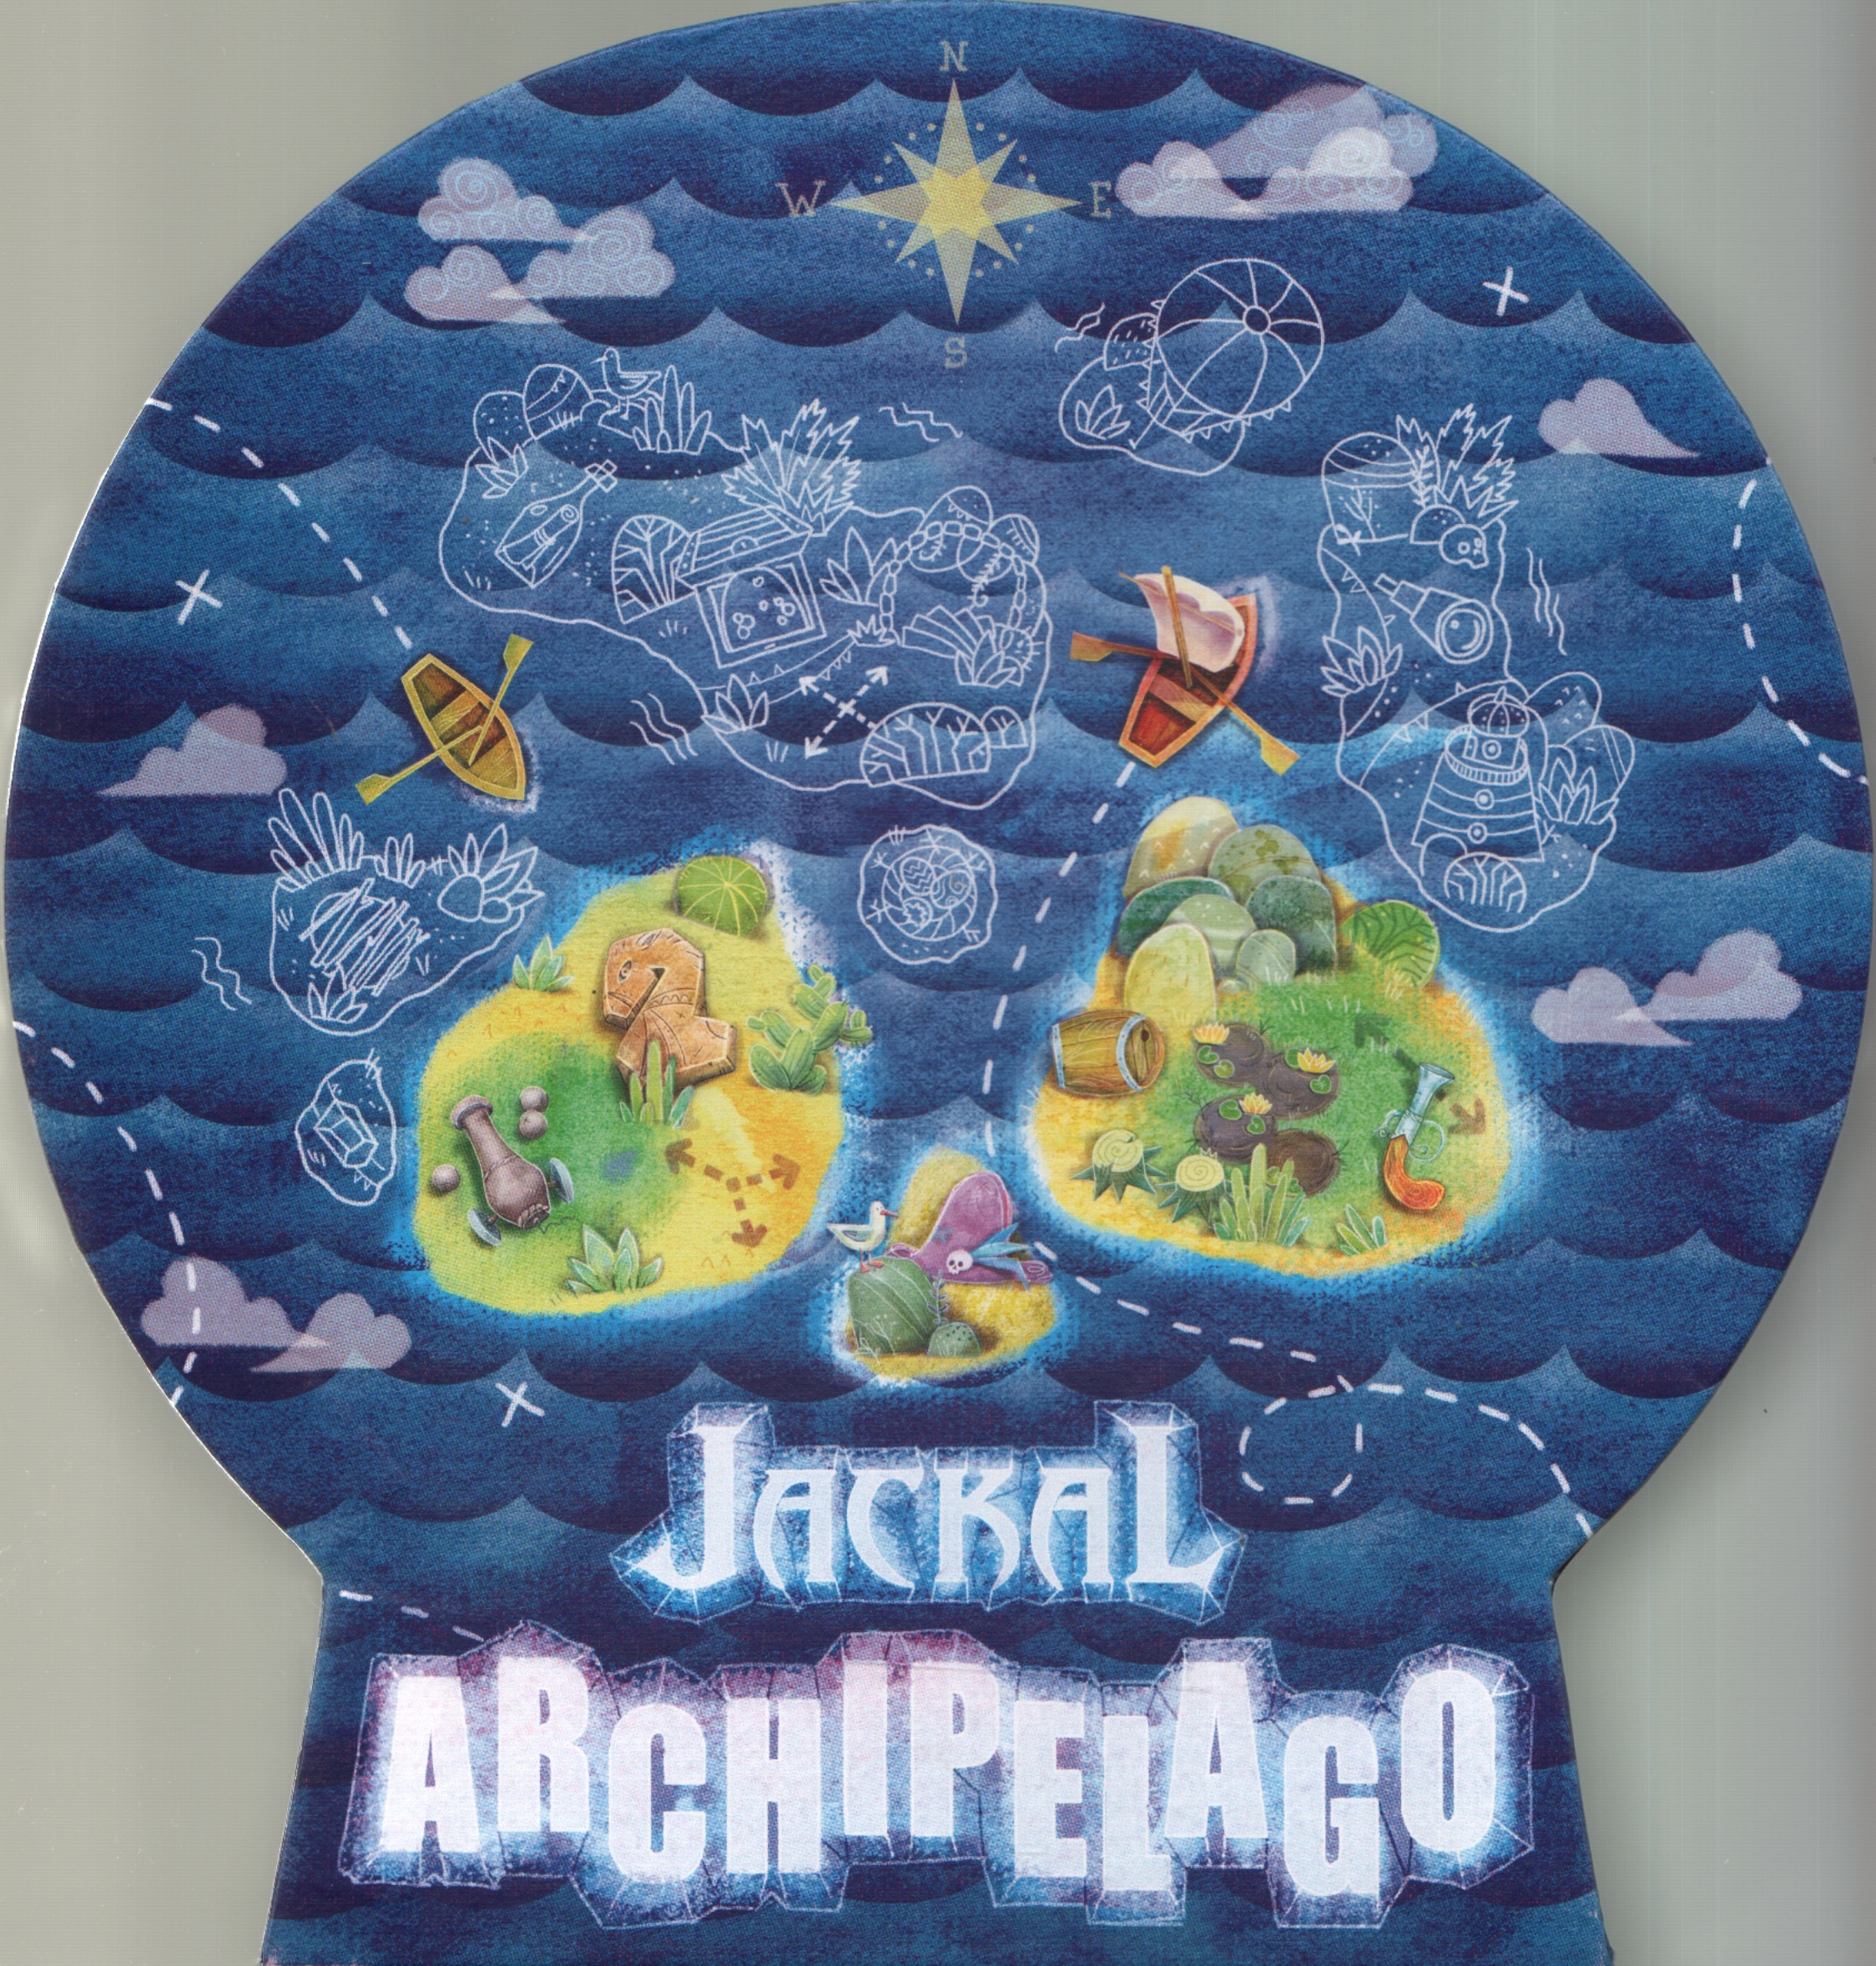 Jackal Archipelago